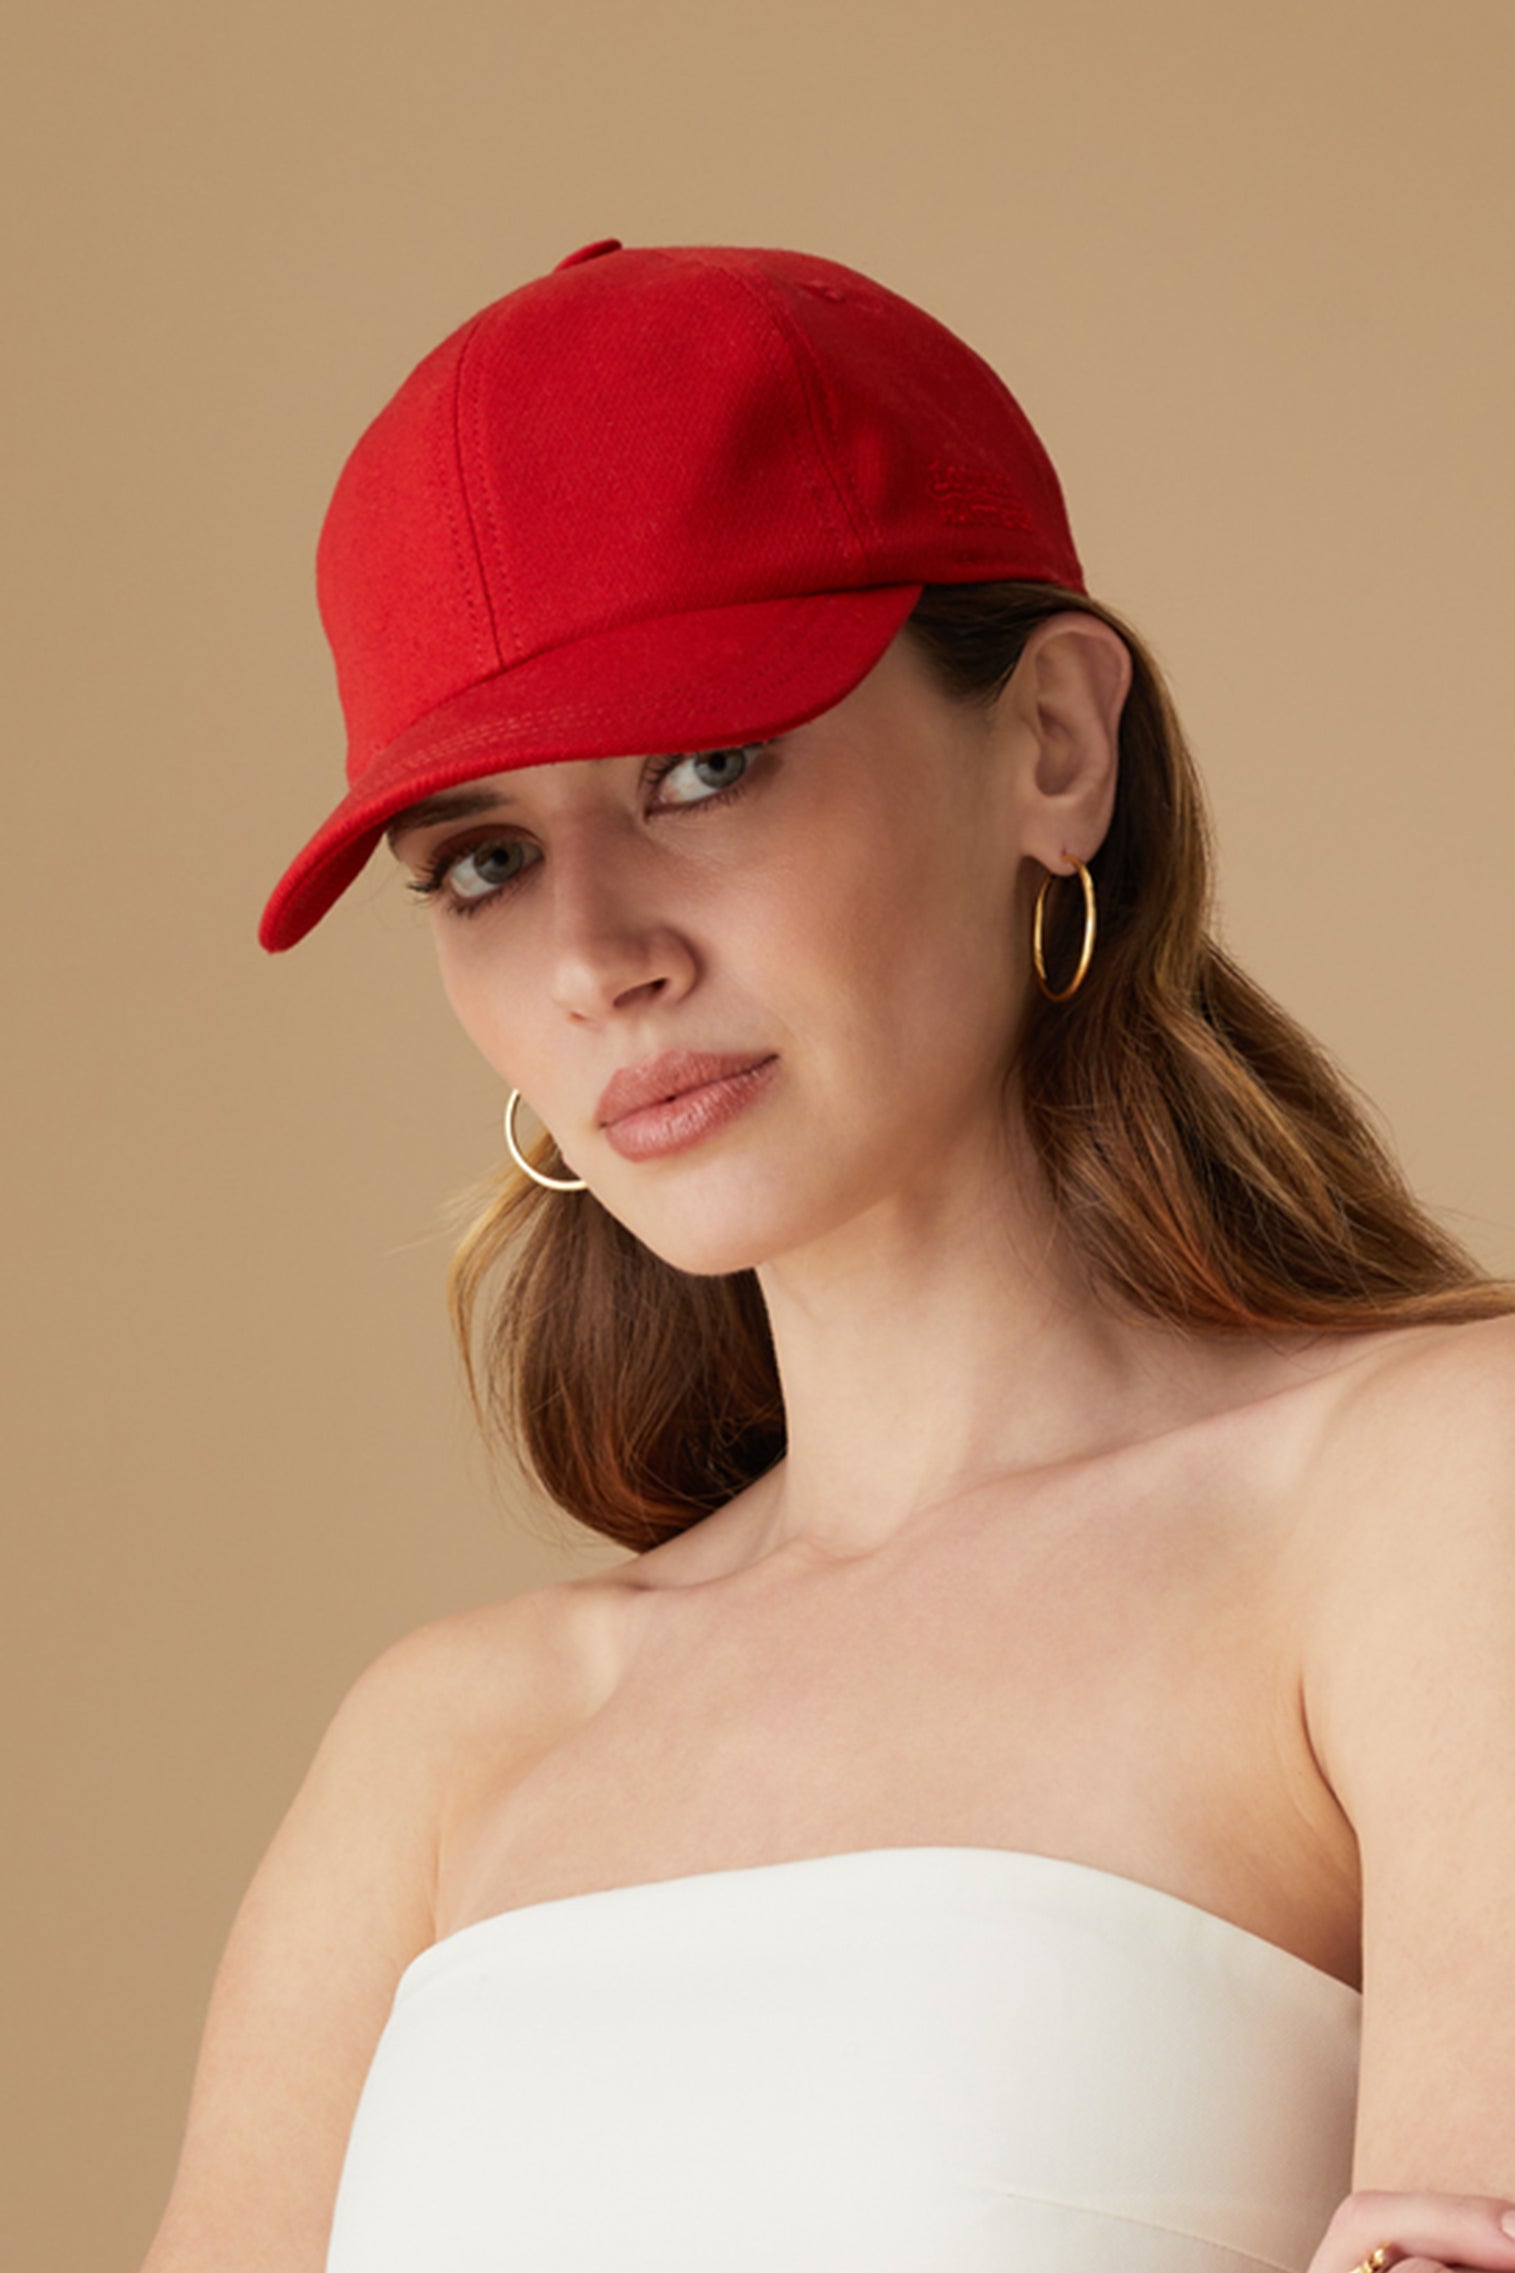 Adjustable Red Baseball Cap - New Season Women's Hats - Lock & Co. Hatters London UK